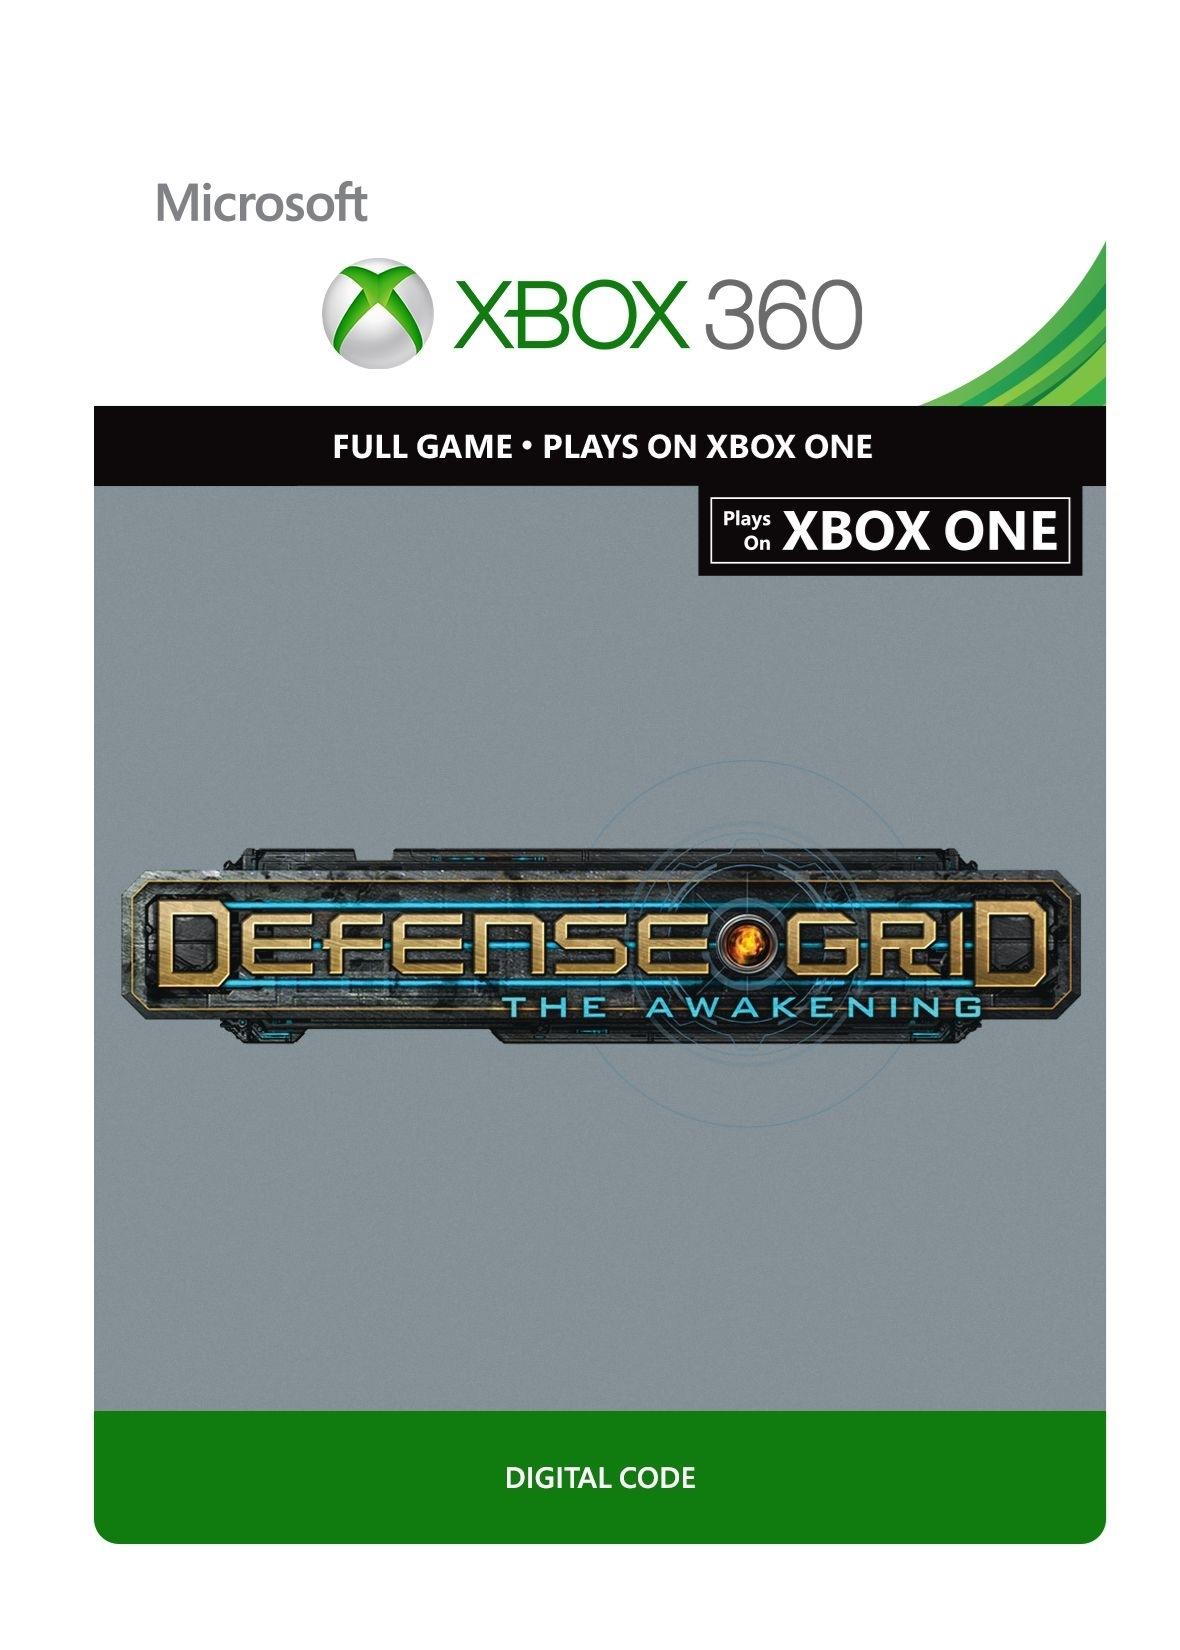 Defense Grid - Xbox 360 - Plays on Xbox One - Arcade Game | 7D6-00033 (65a878b5-332c-45a7-846c-07777a29ca5b)